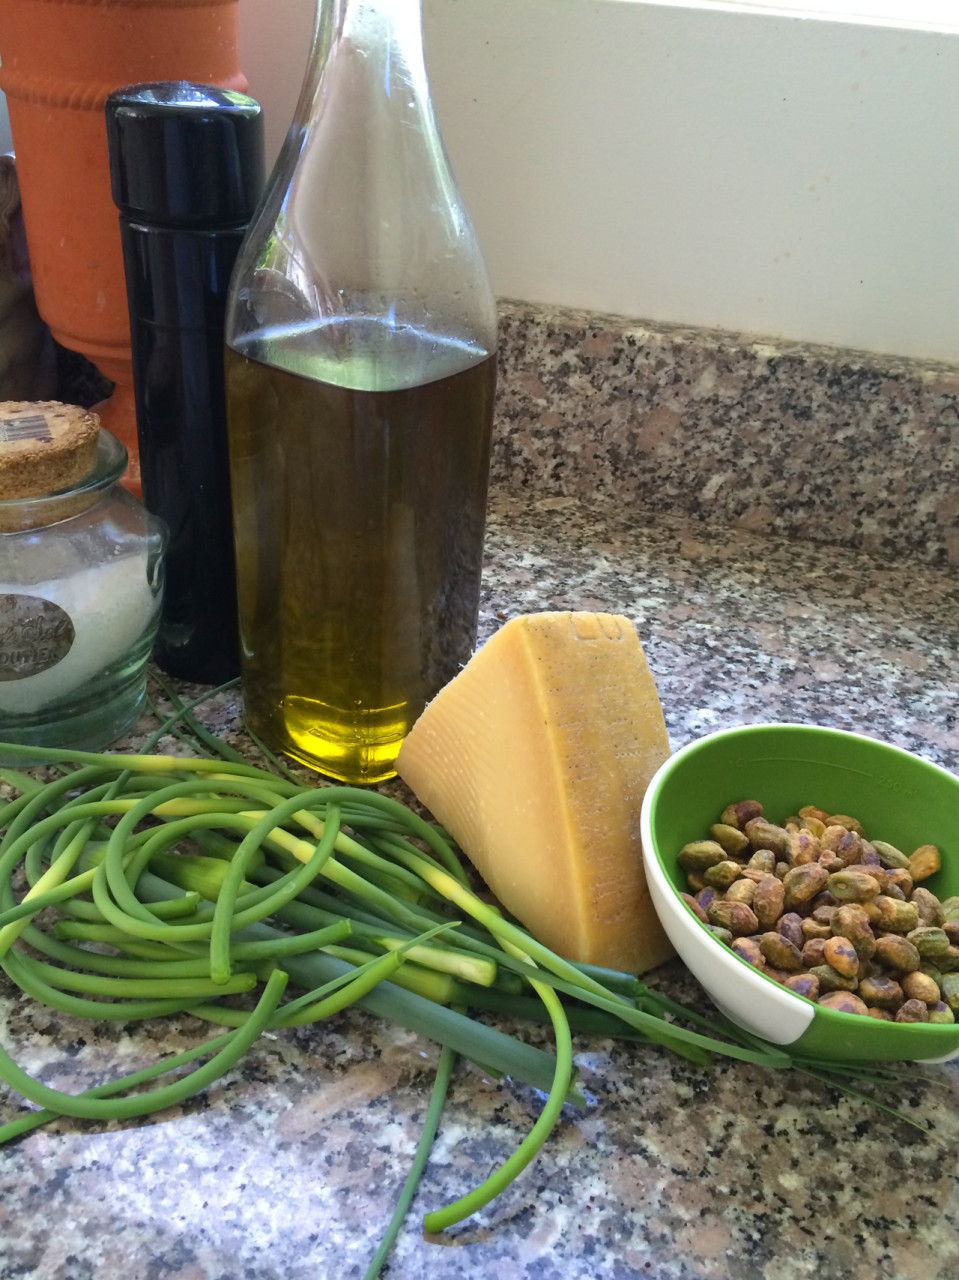 Ingredients for "Garlic Scape and Pistachio Pesto." (Kathy Gunst)